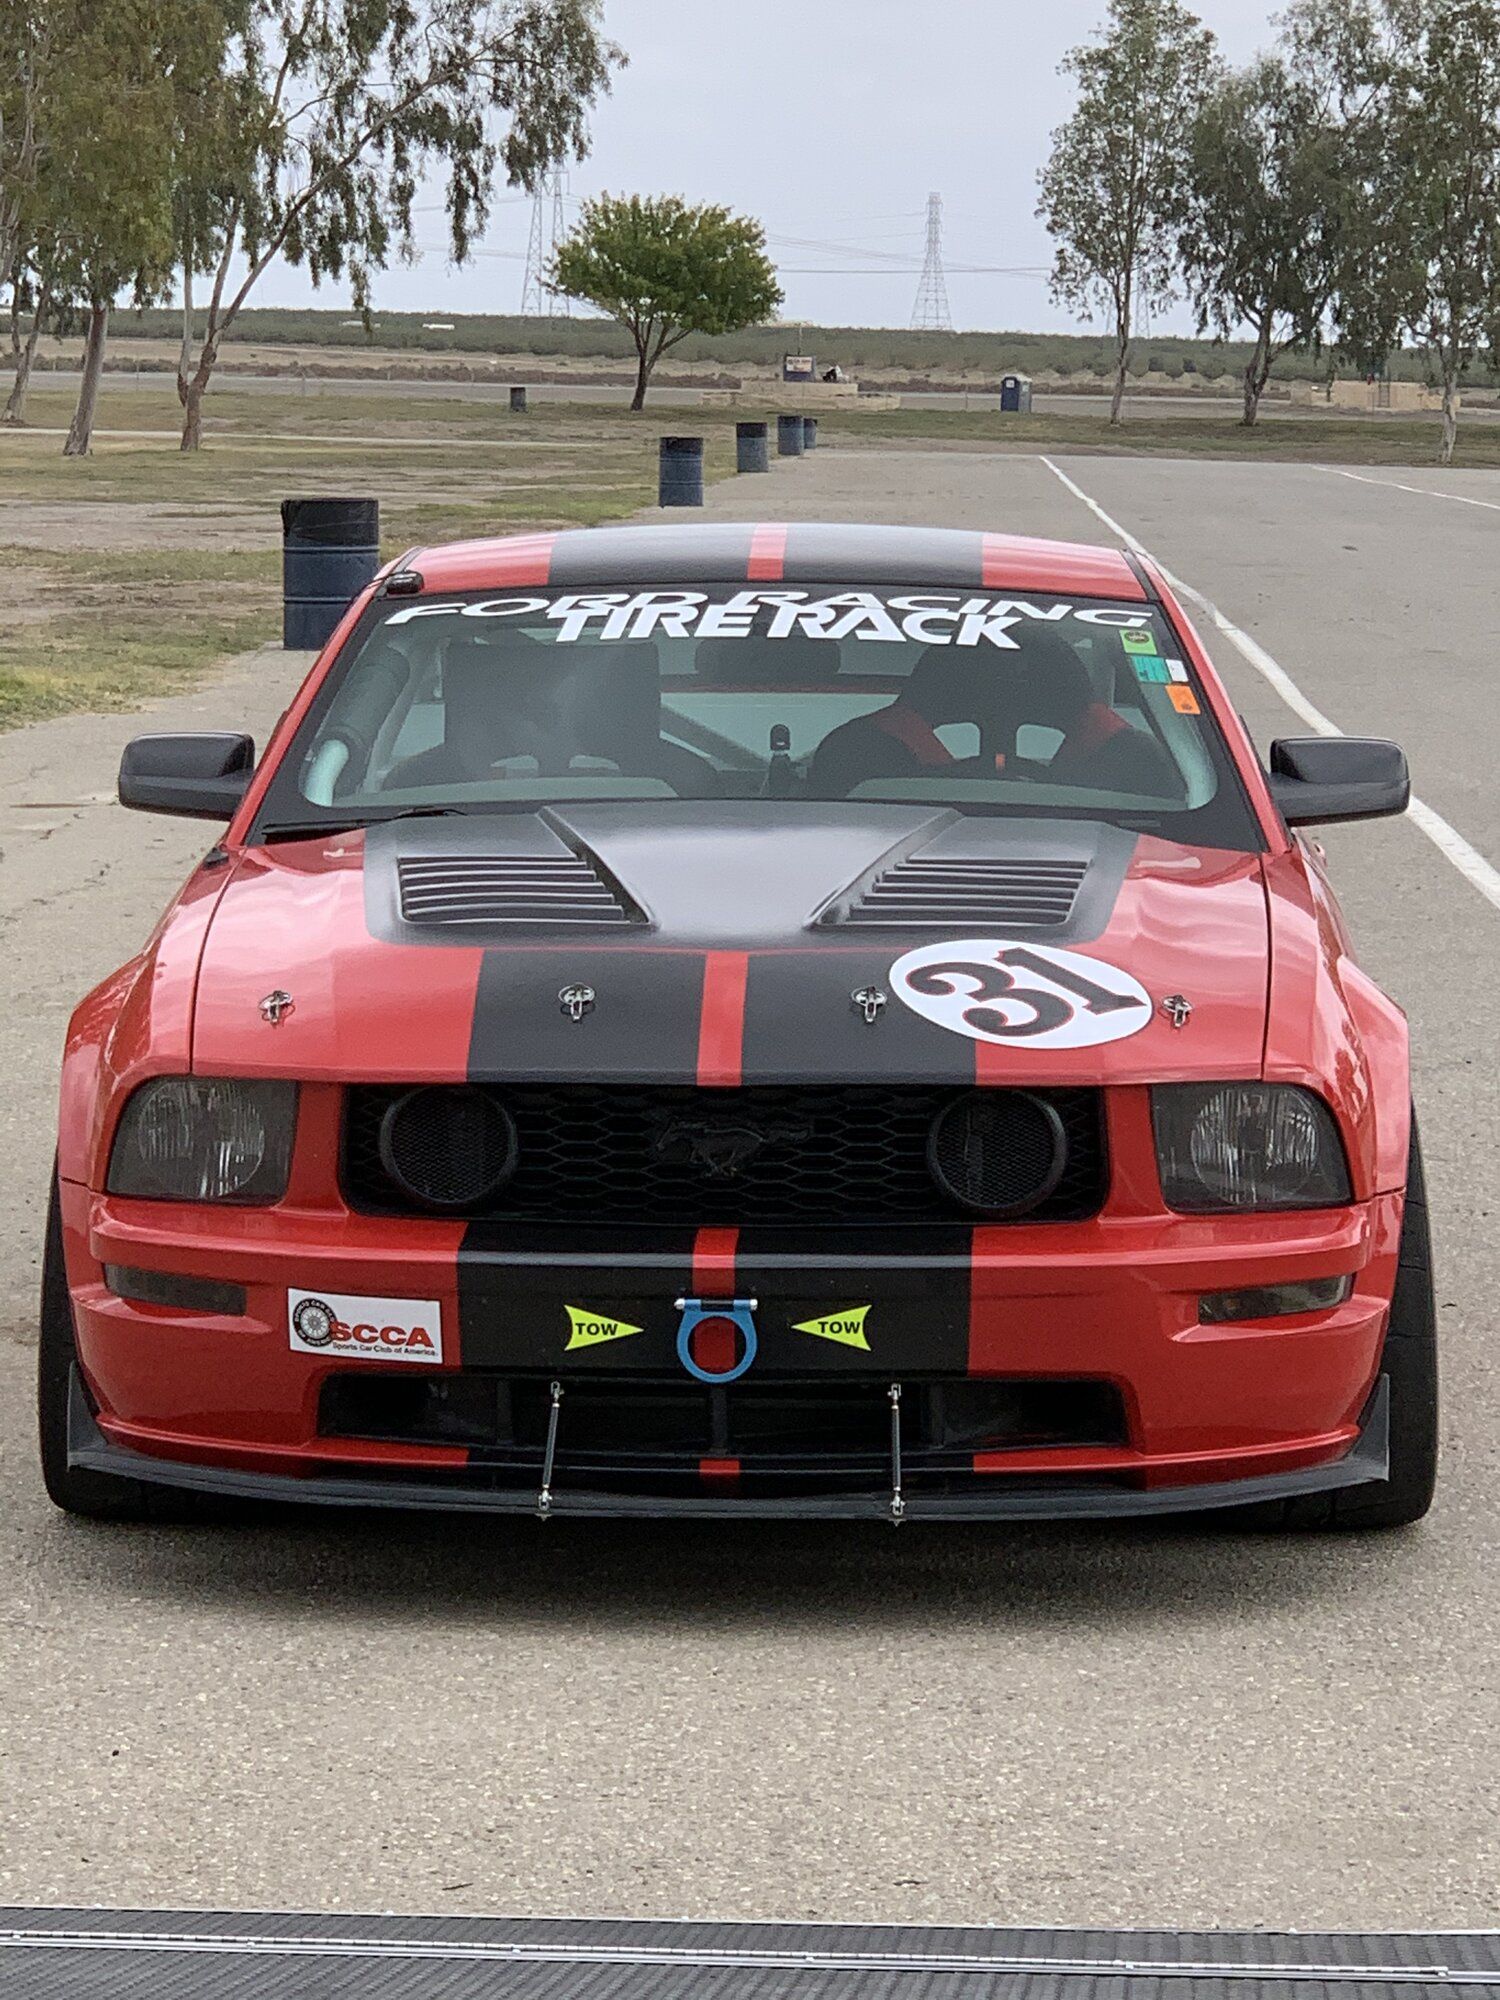 2005 Mustang
GT_50L HPDE/Track -  (Lighting McQueen)